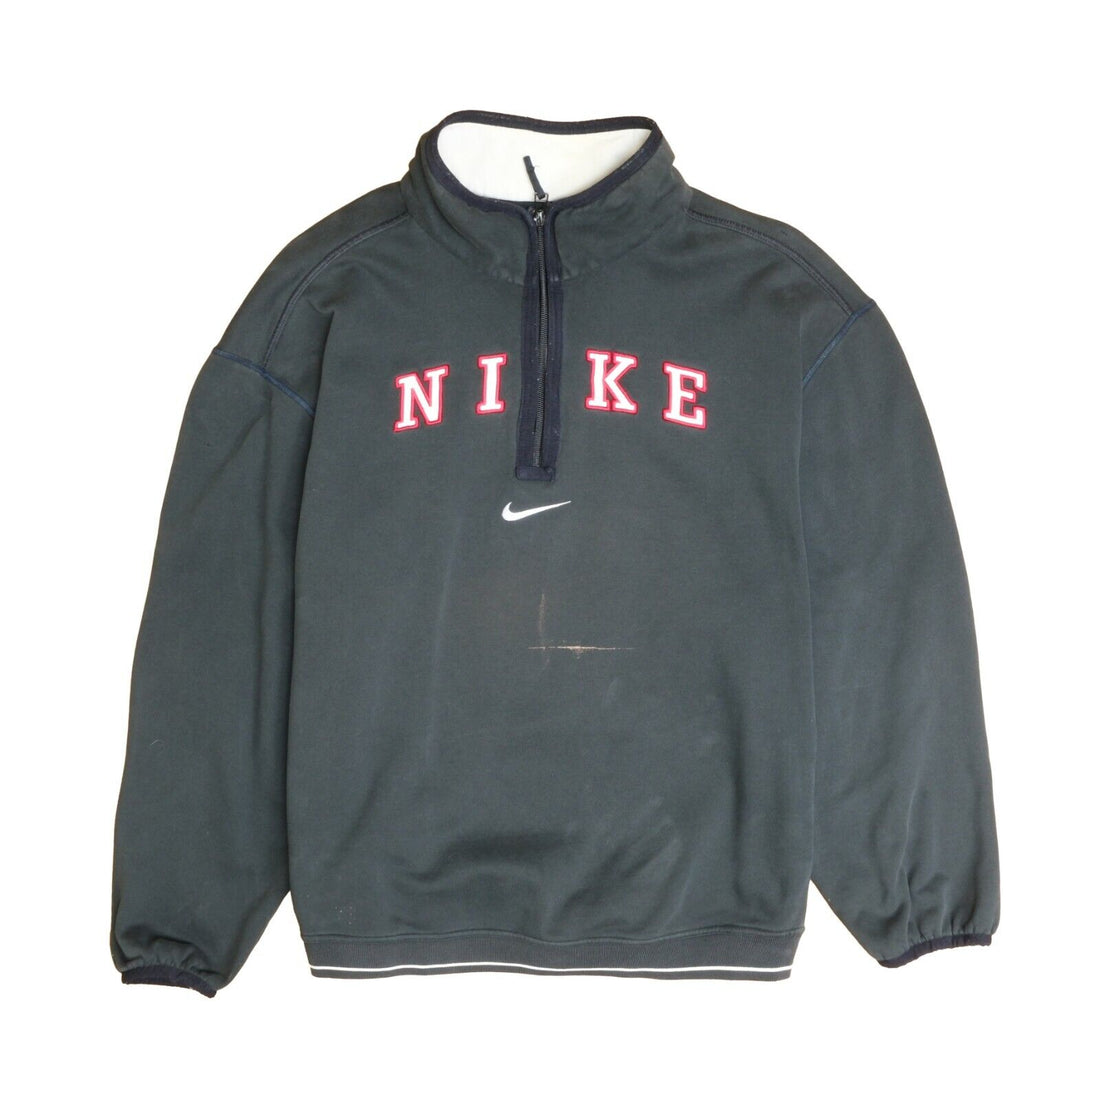 Vintage Nike 1/4 Zip Sweatshirt Size Large Black Pullover